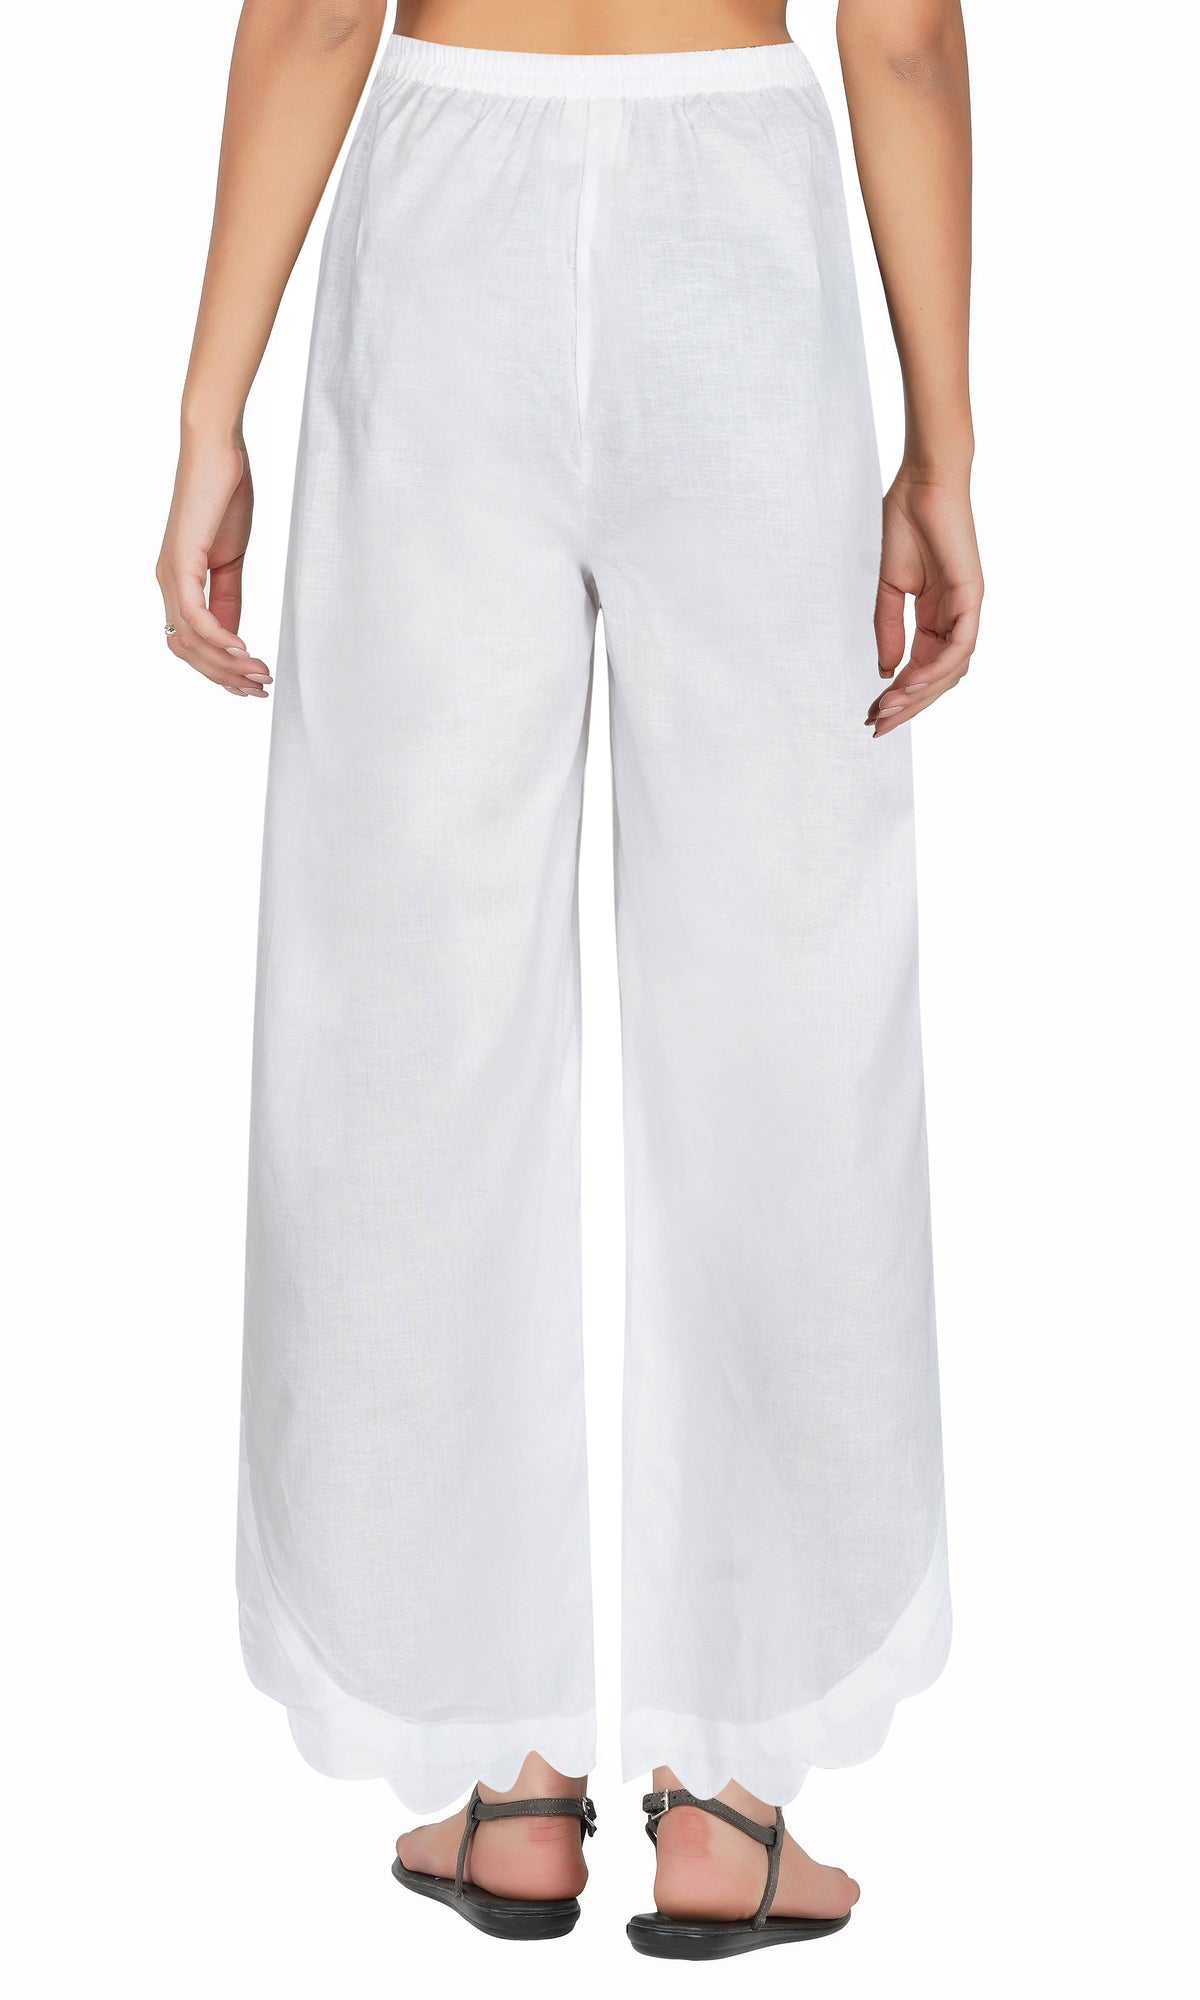 White Side Scalloped Cotton Pants